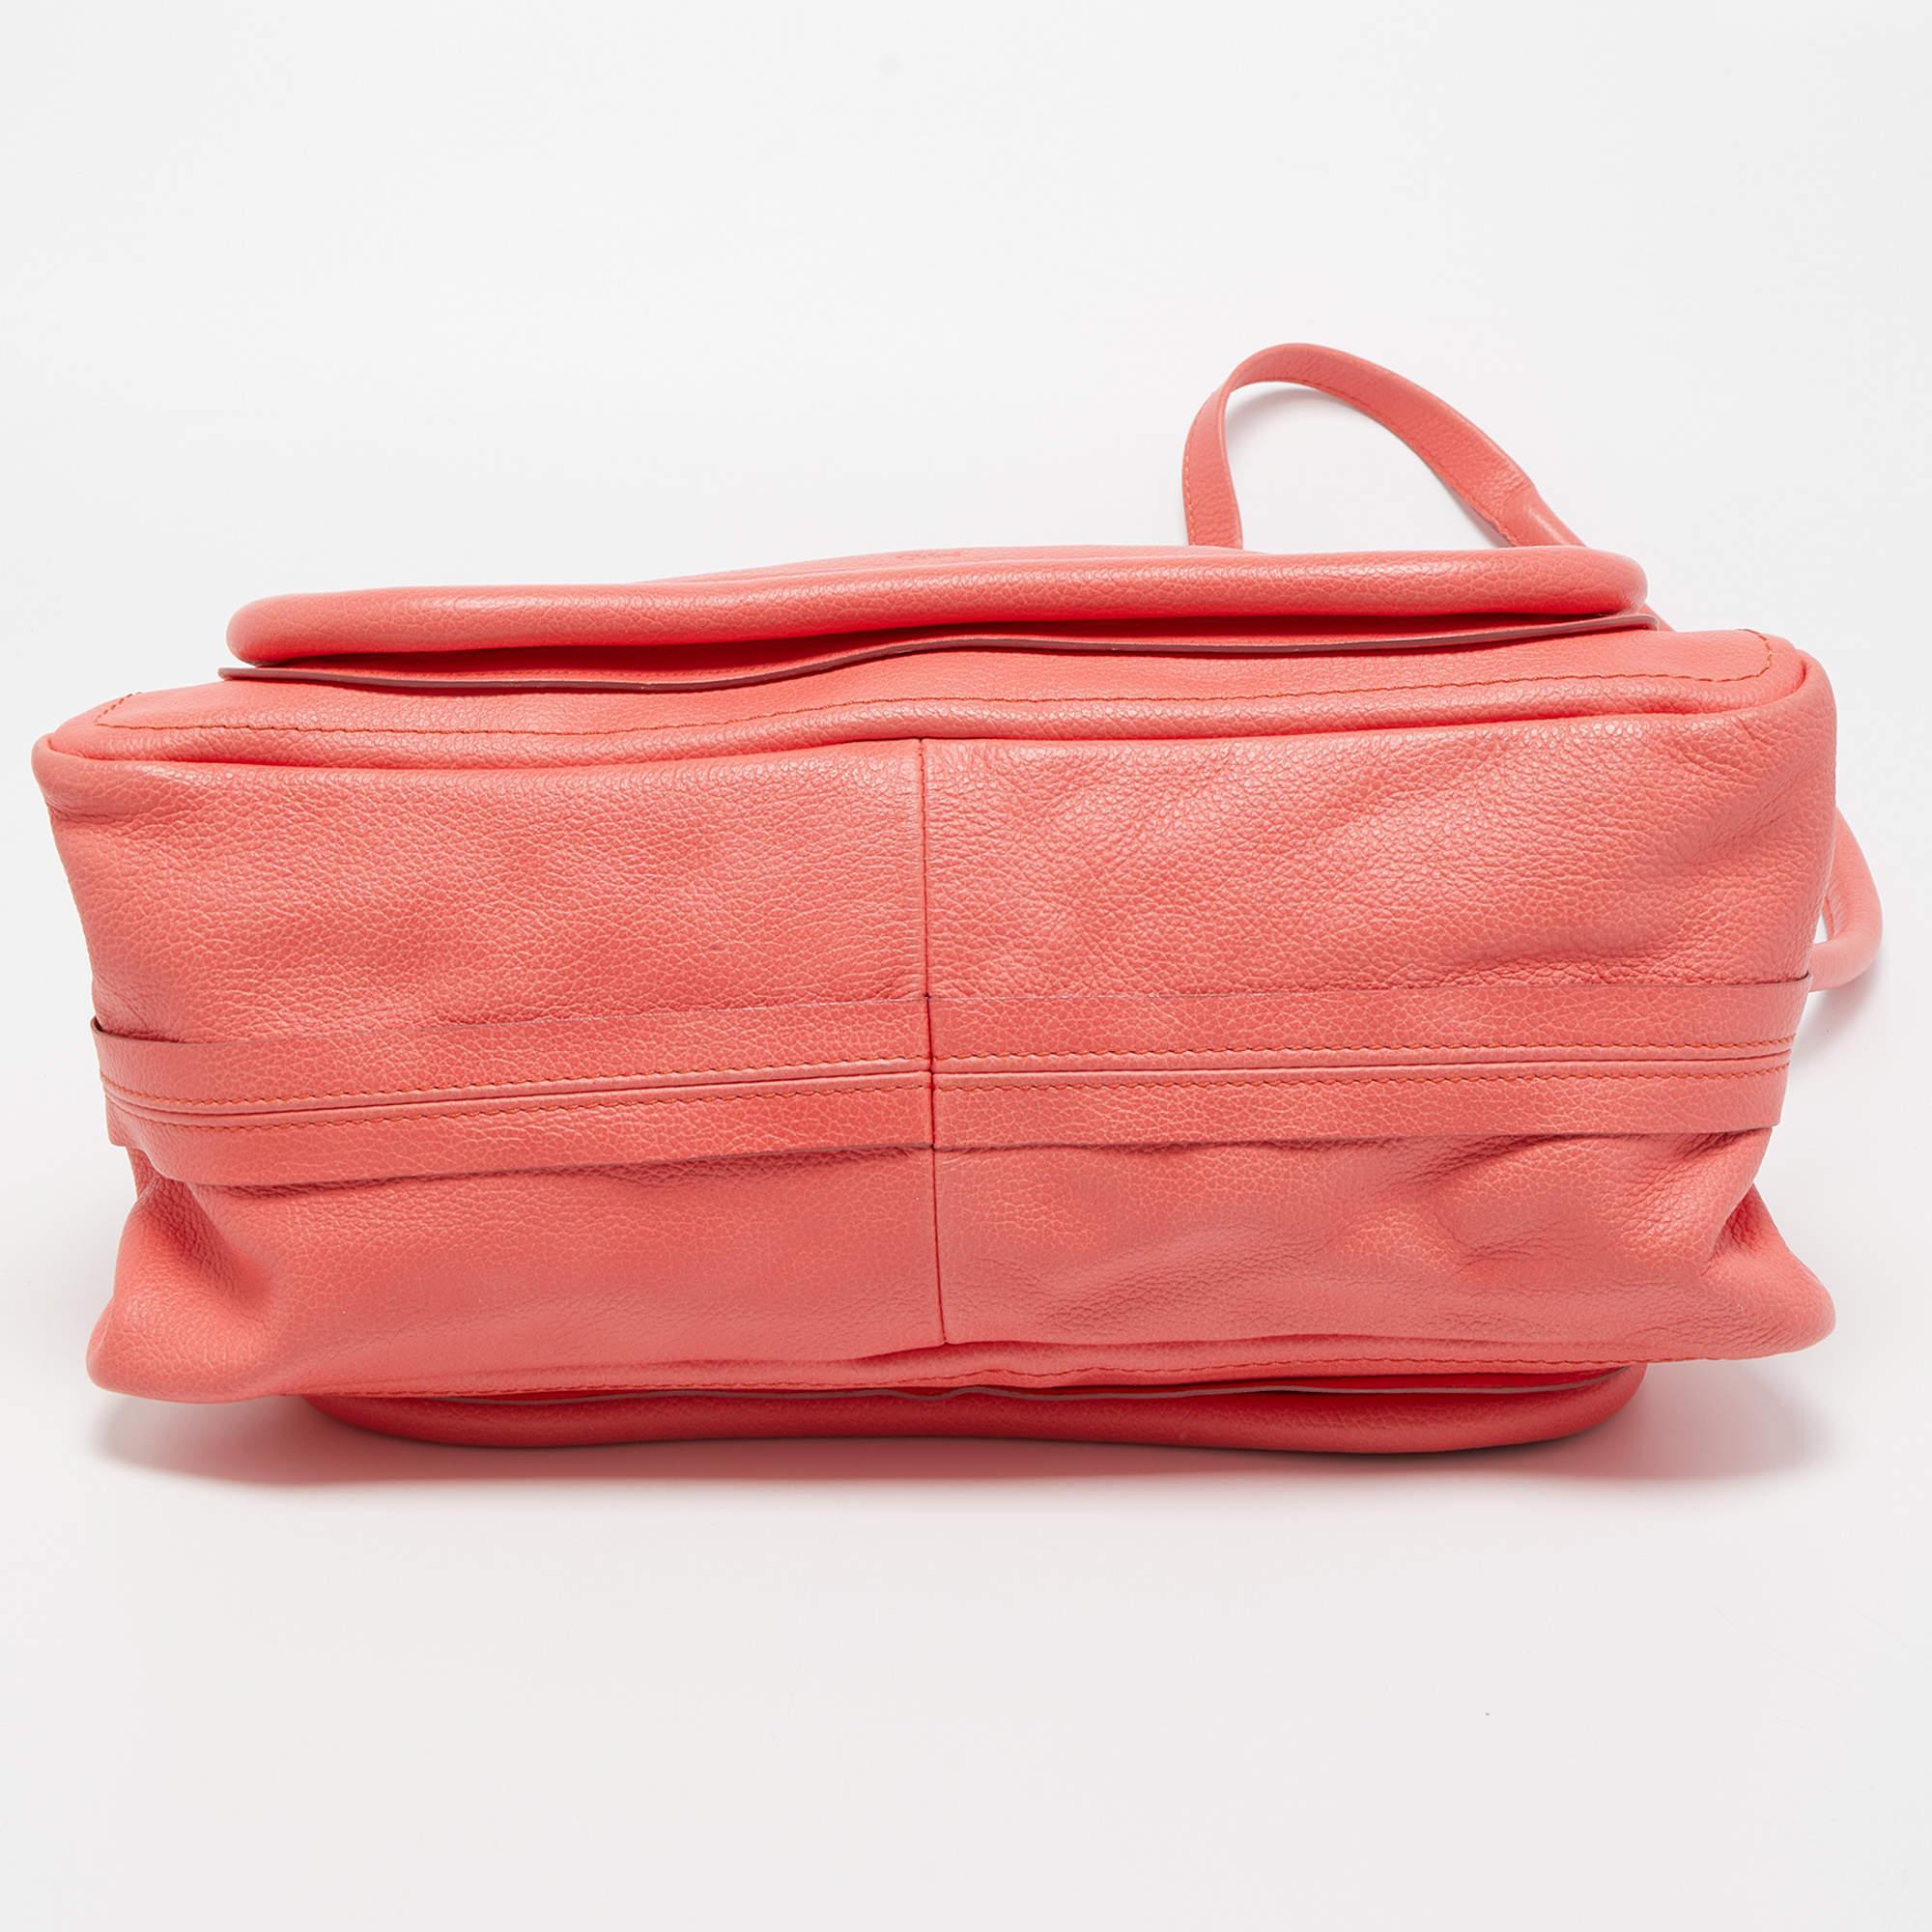 Chloe Coral Pink Leather Medium Paraty Shoulder Bag 1